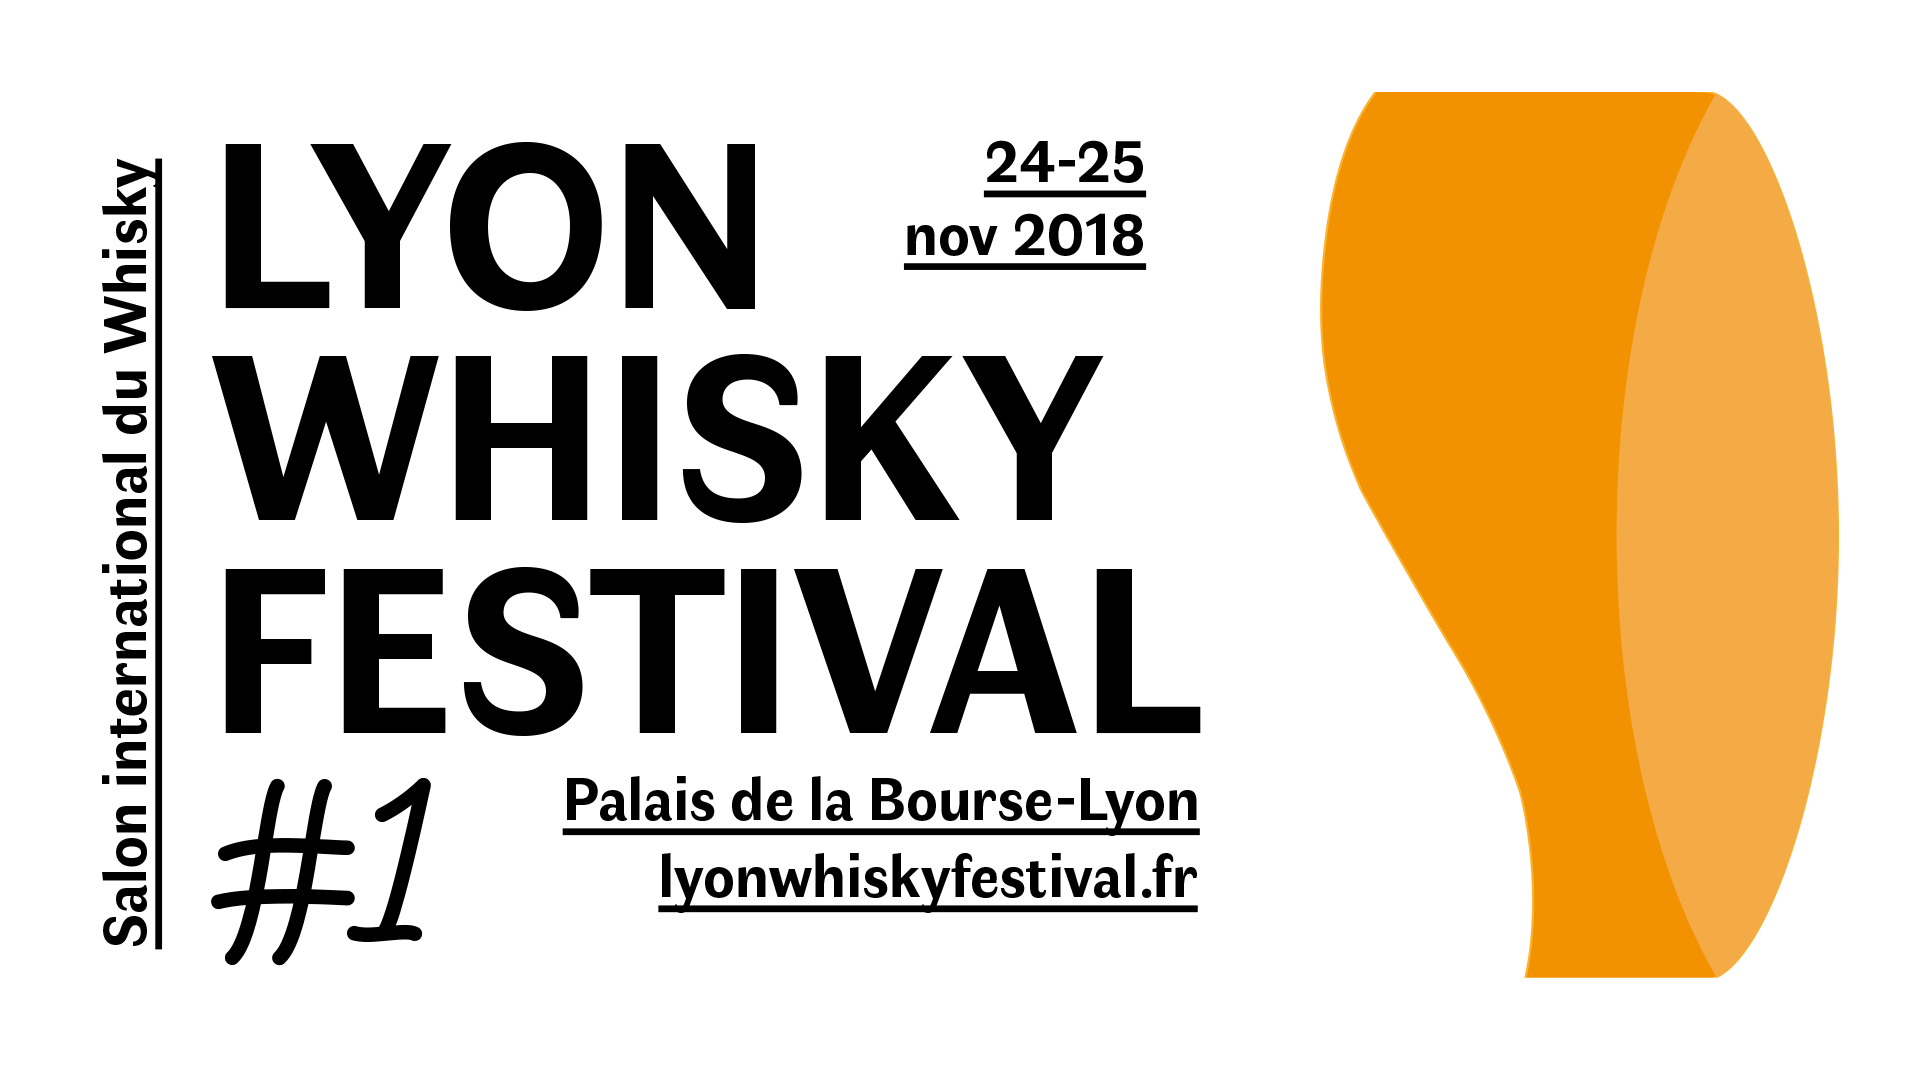 Lyon Whisky Festival